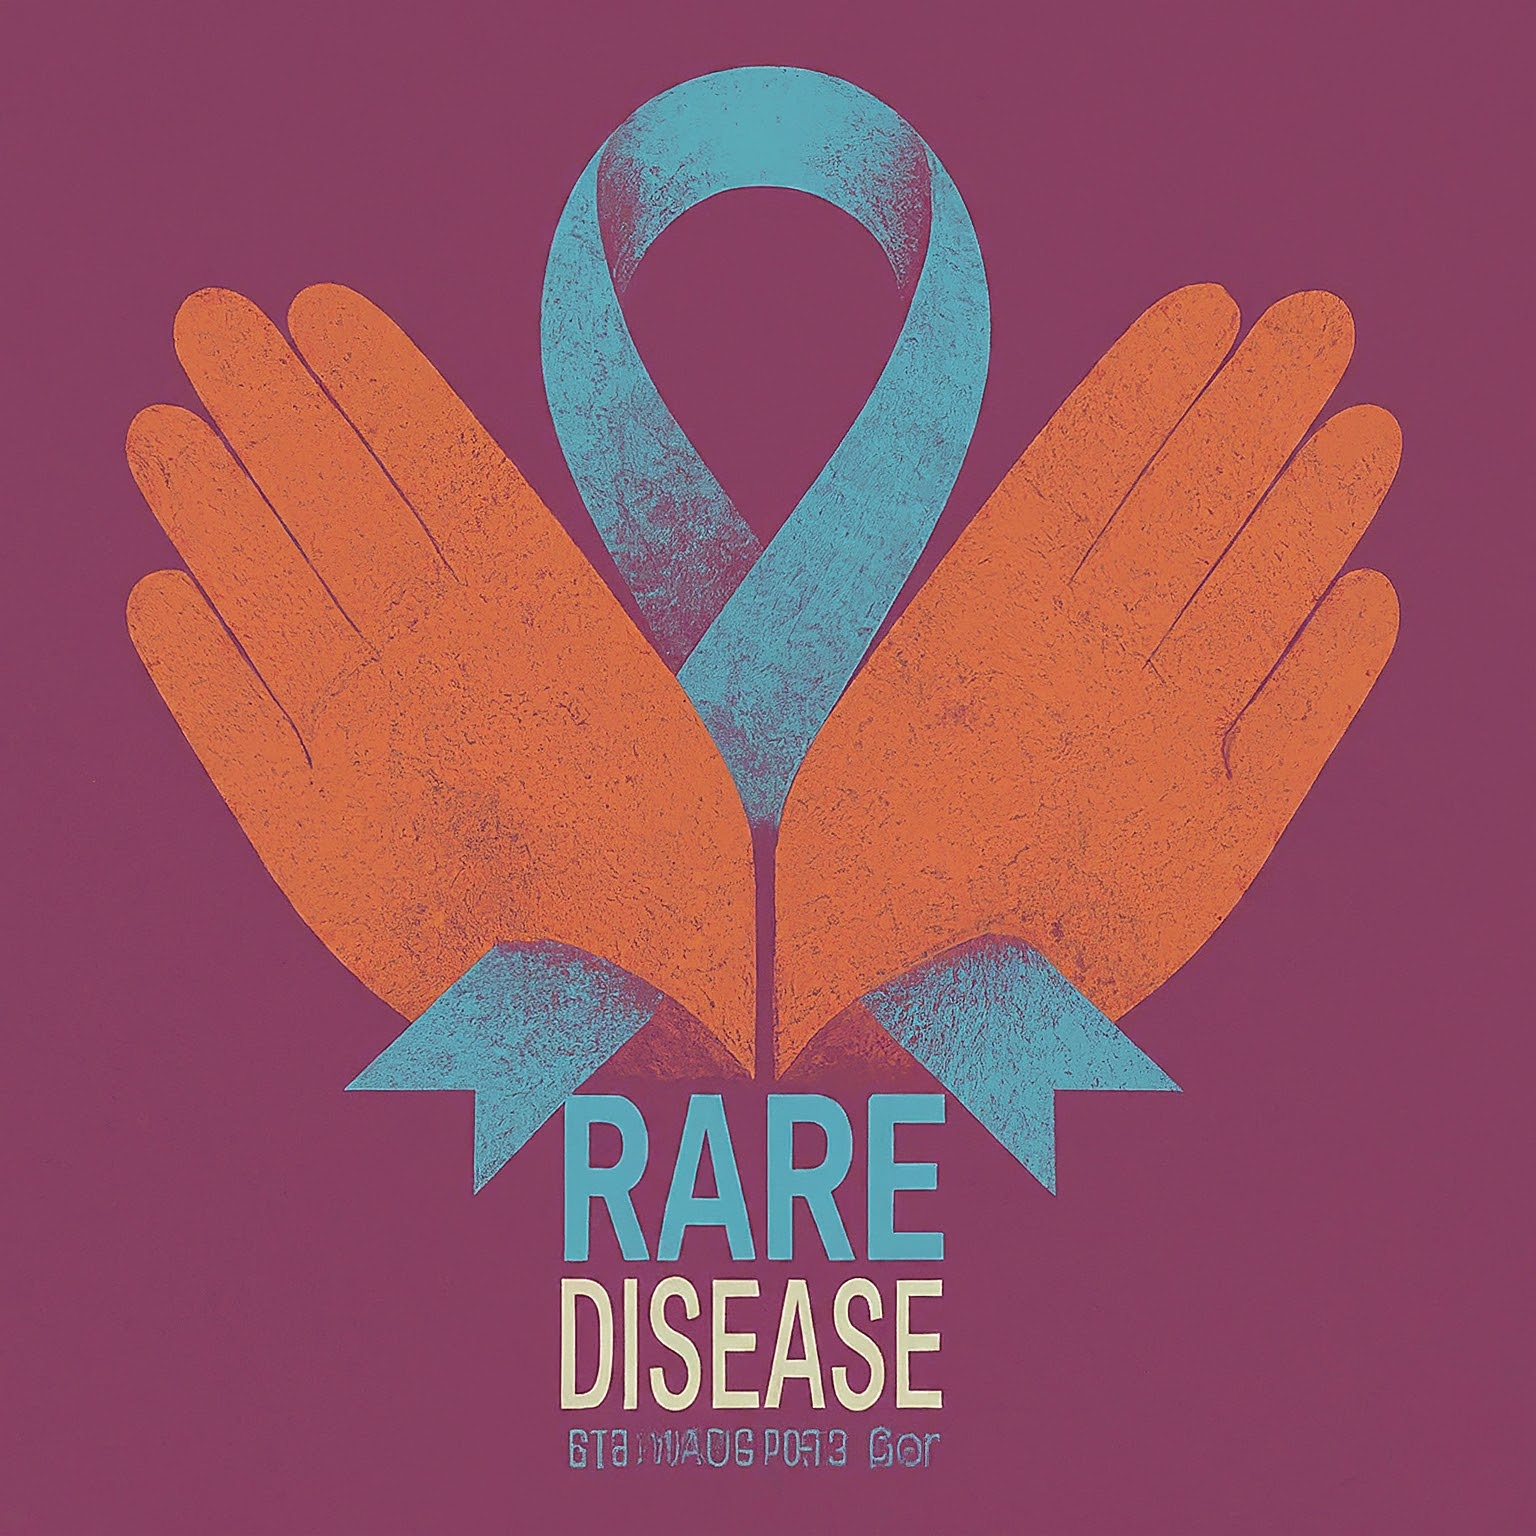 Rare Disease day